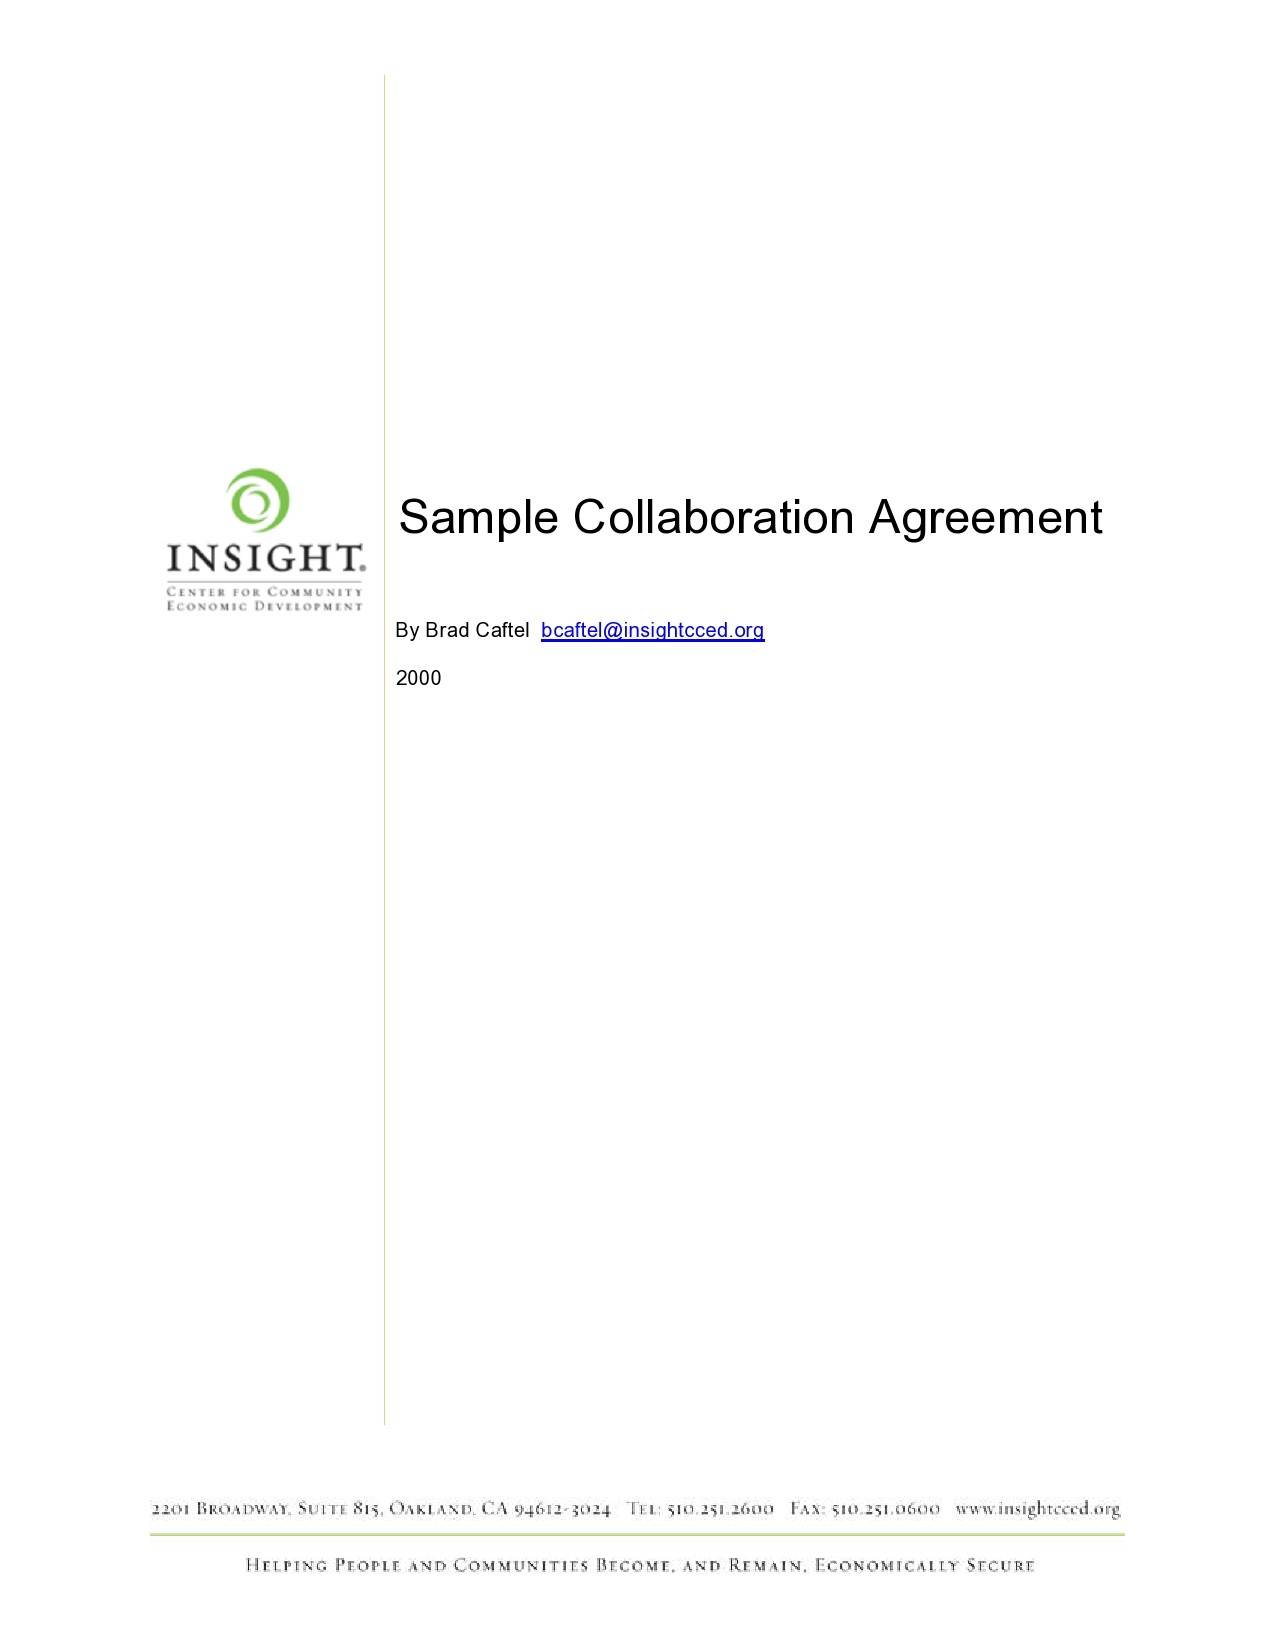 Free collaboration agreement 17